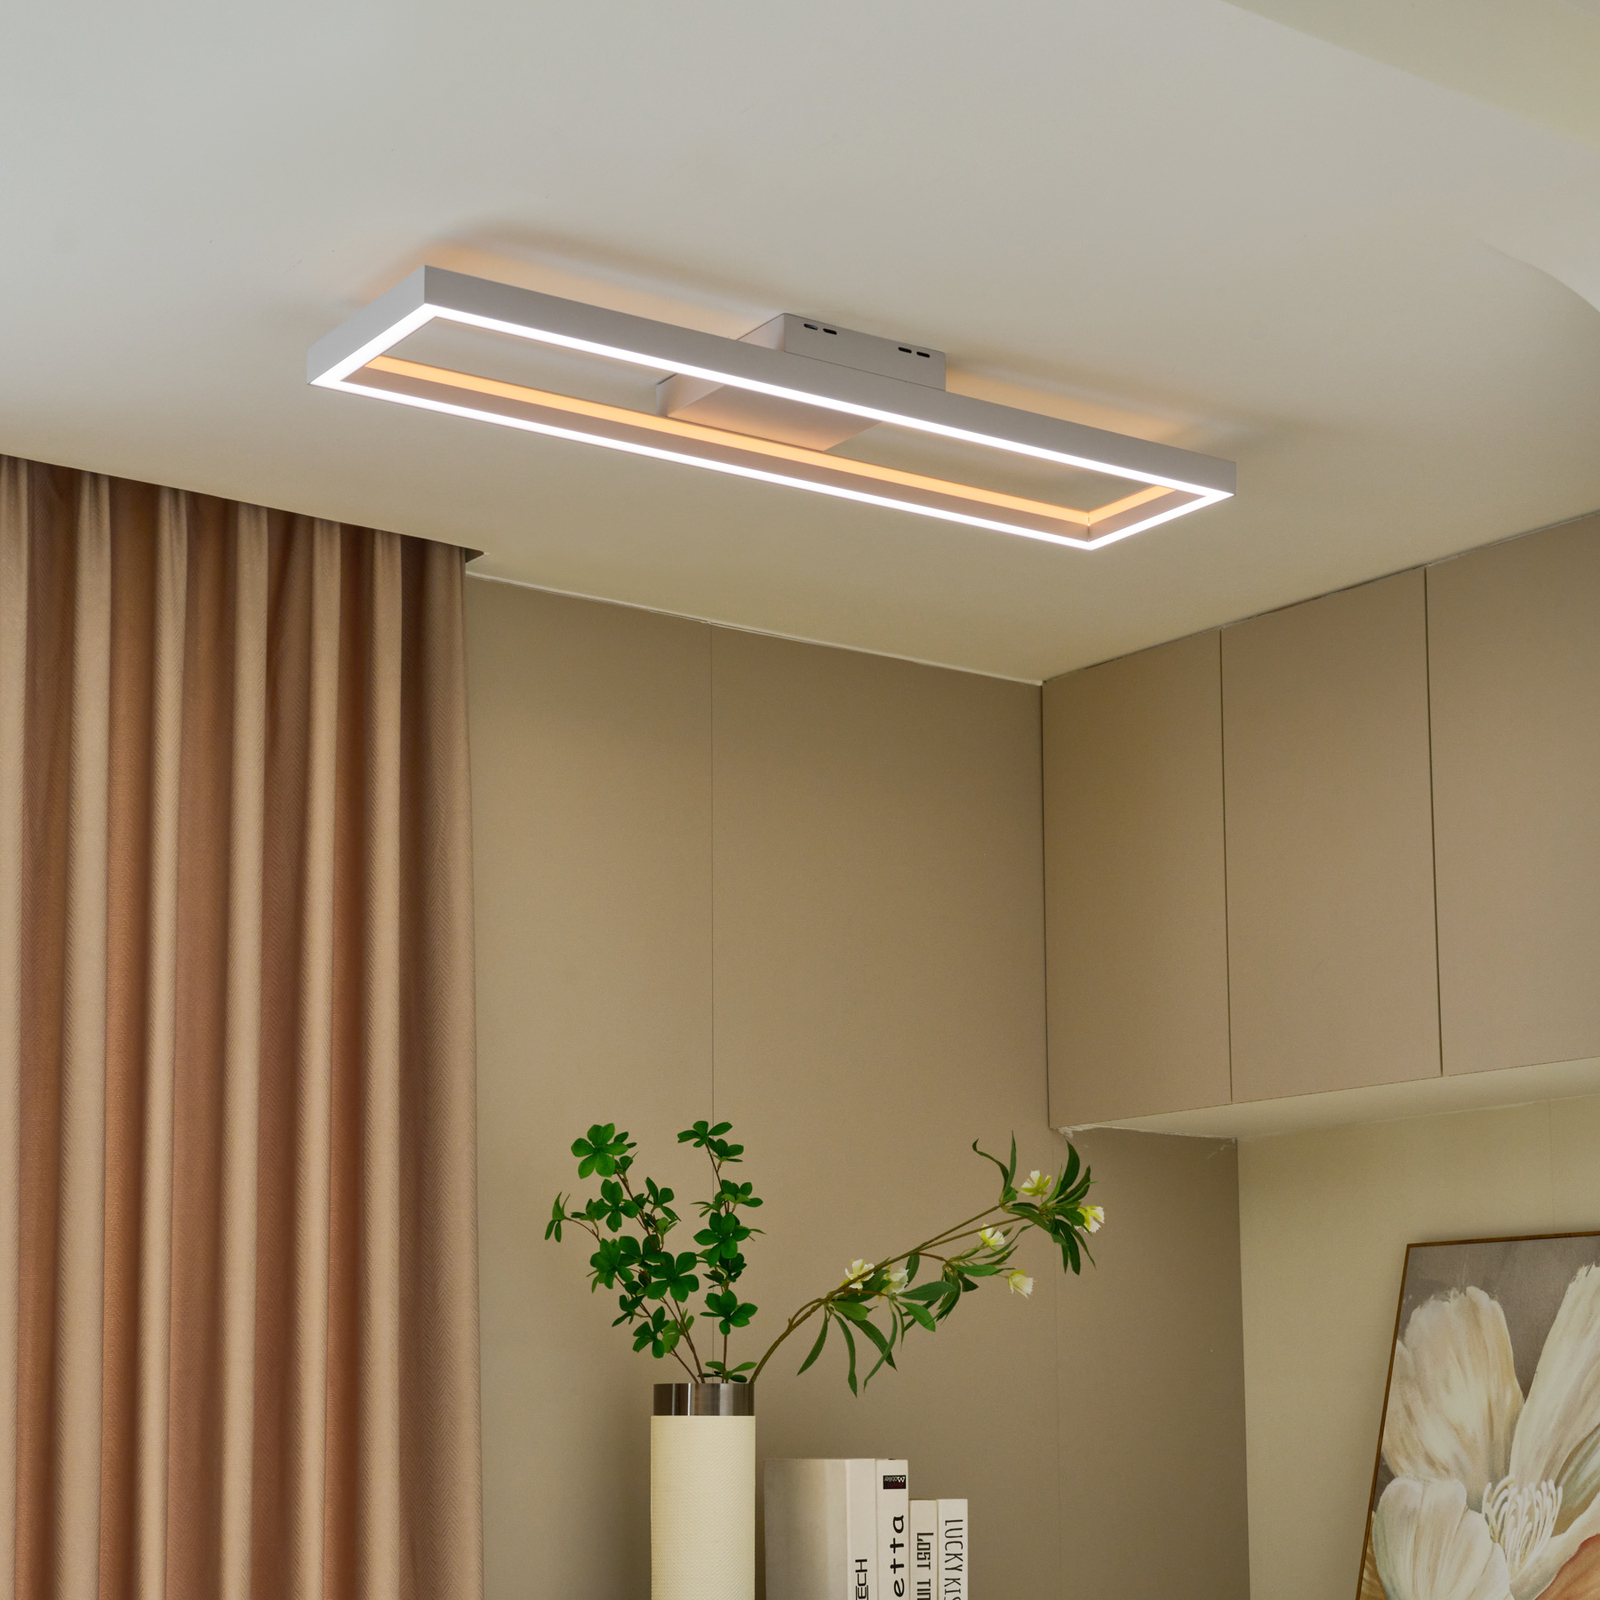 Lucande Smart LED stropné svietidlo Tjado, 100 cm, biela, Tuya